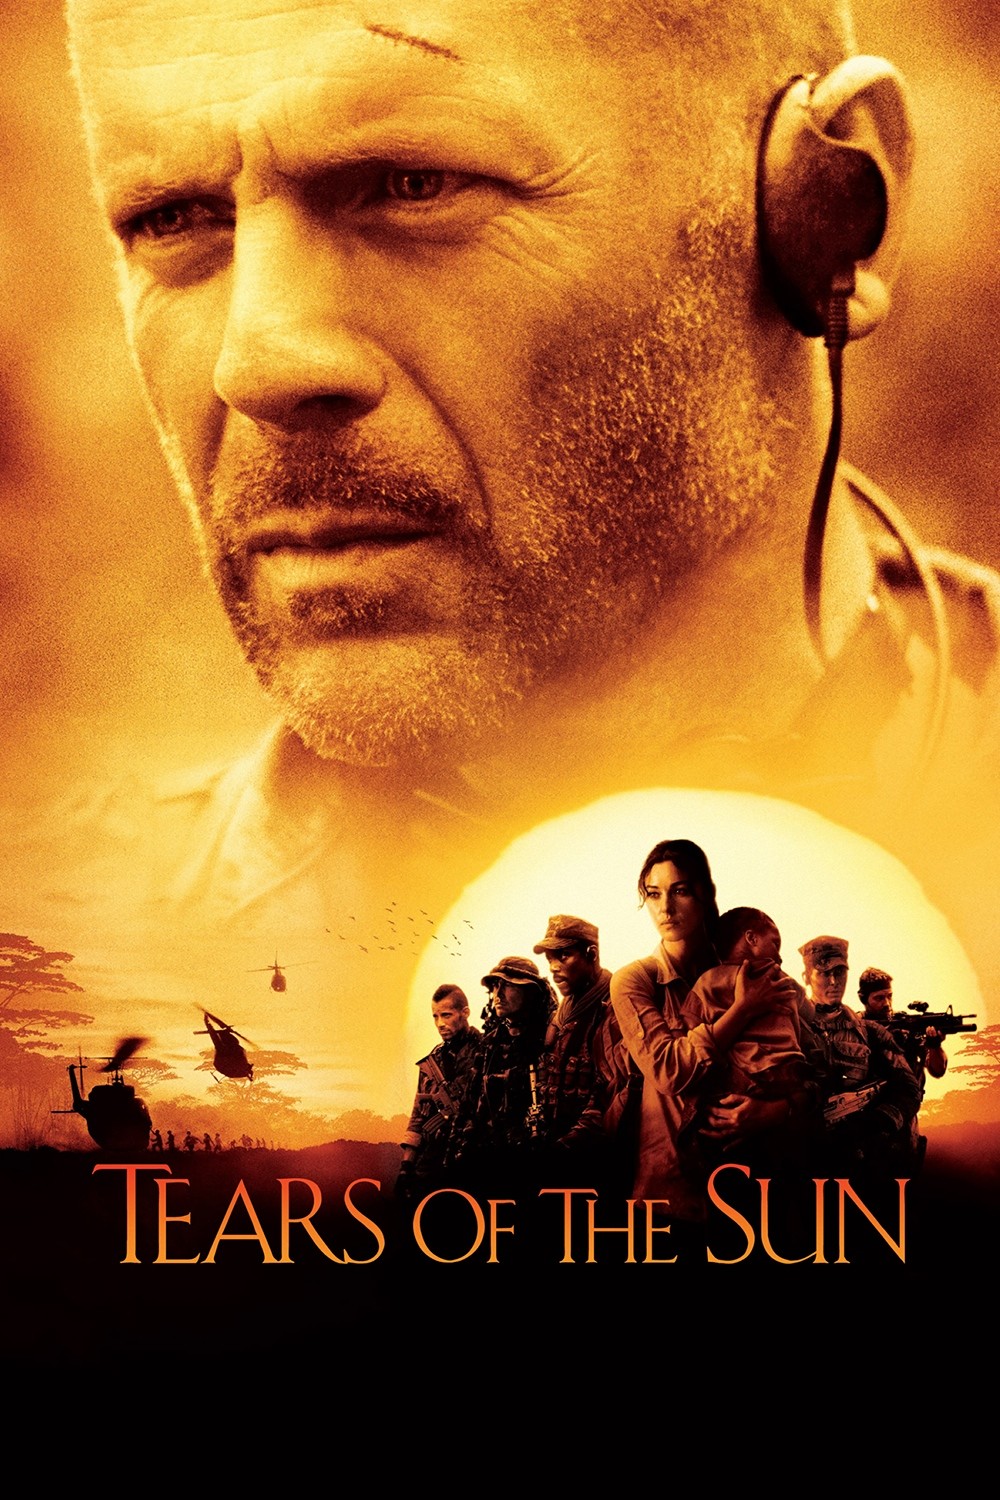 [太阳泪].Tears.of.the.Sun.2003.BluRay.1080p.MPEG2.LPCM 5.1-F13@HDSpace[22.14G]